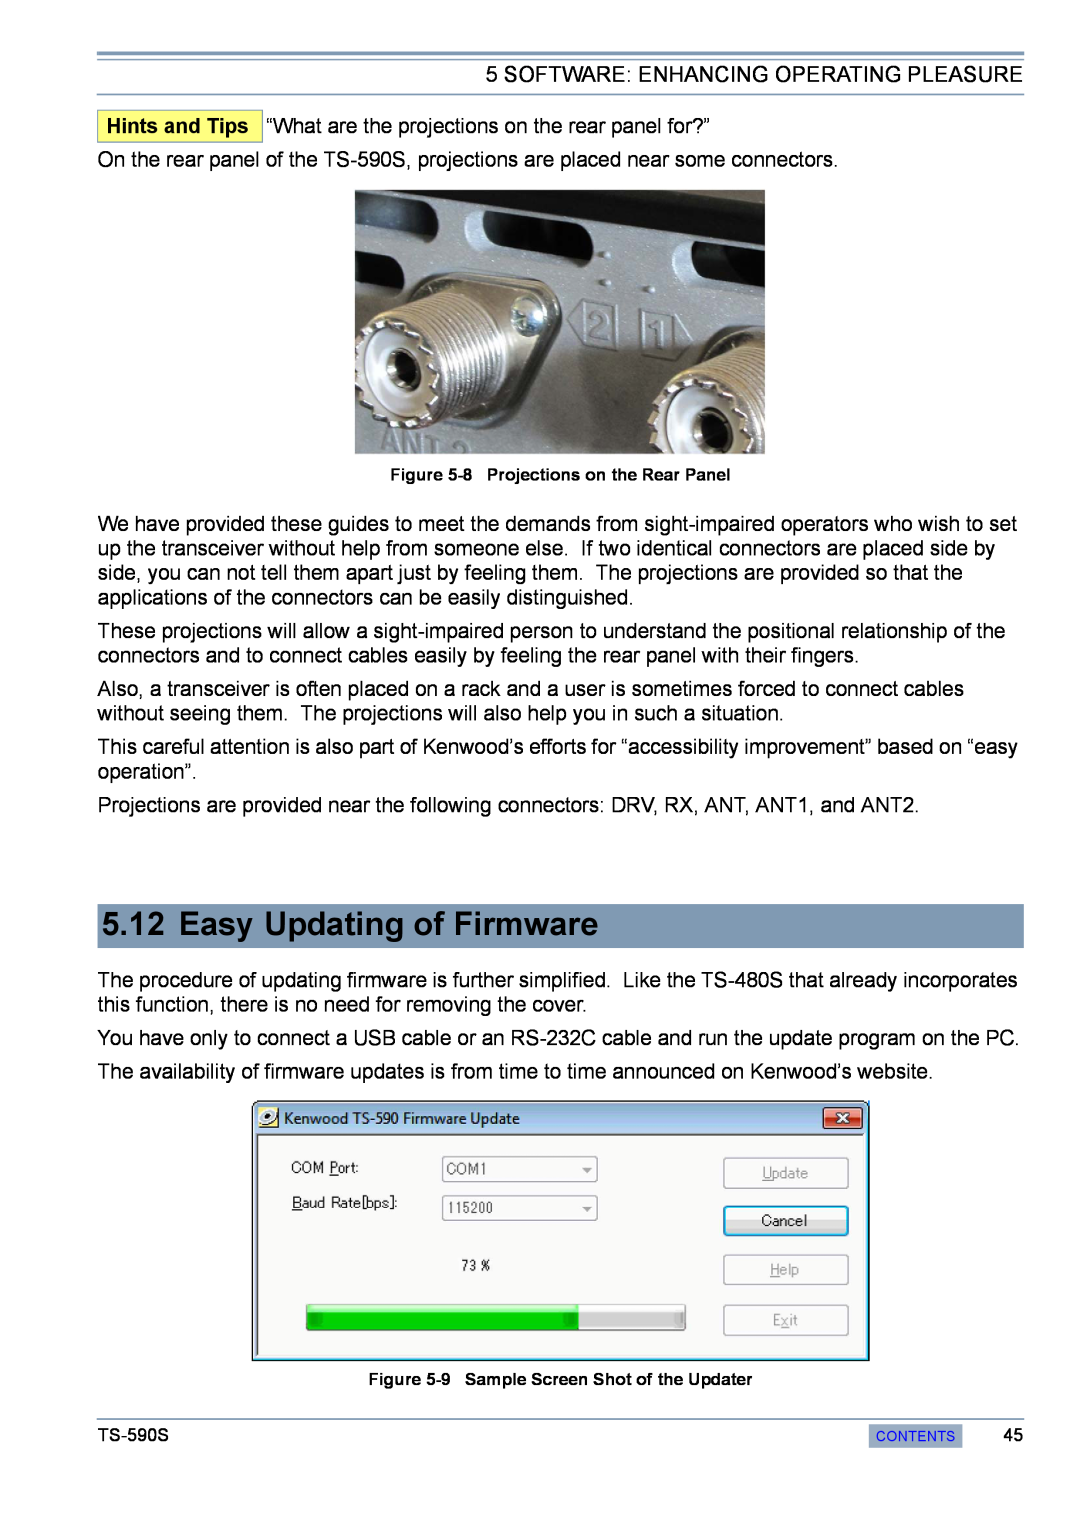 Kenwood TS-590S manual Easy Updating of Firmware, Software: Enhancing Operating Pleasure 